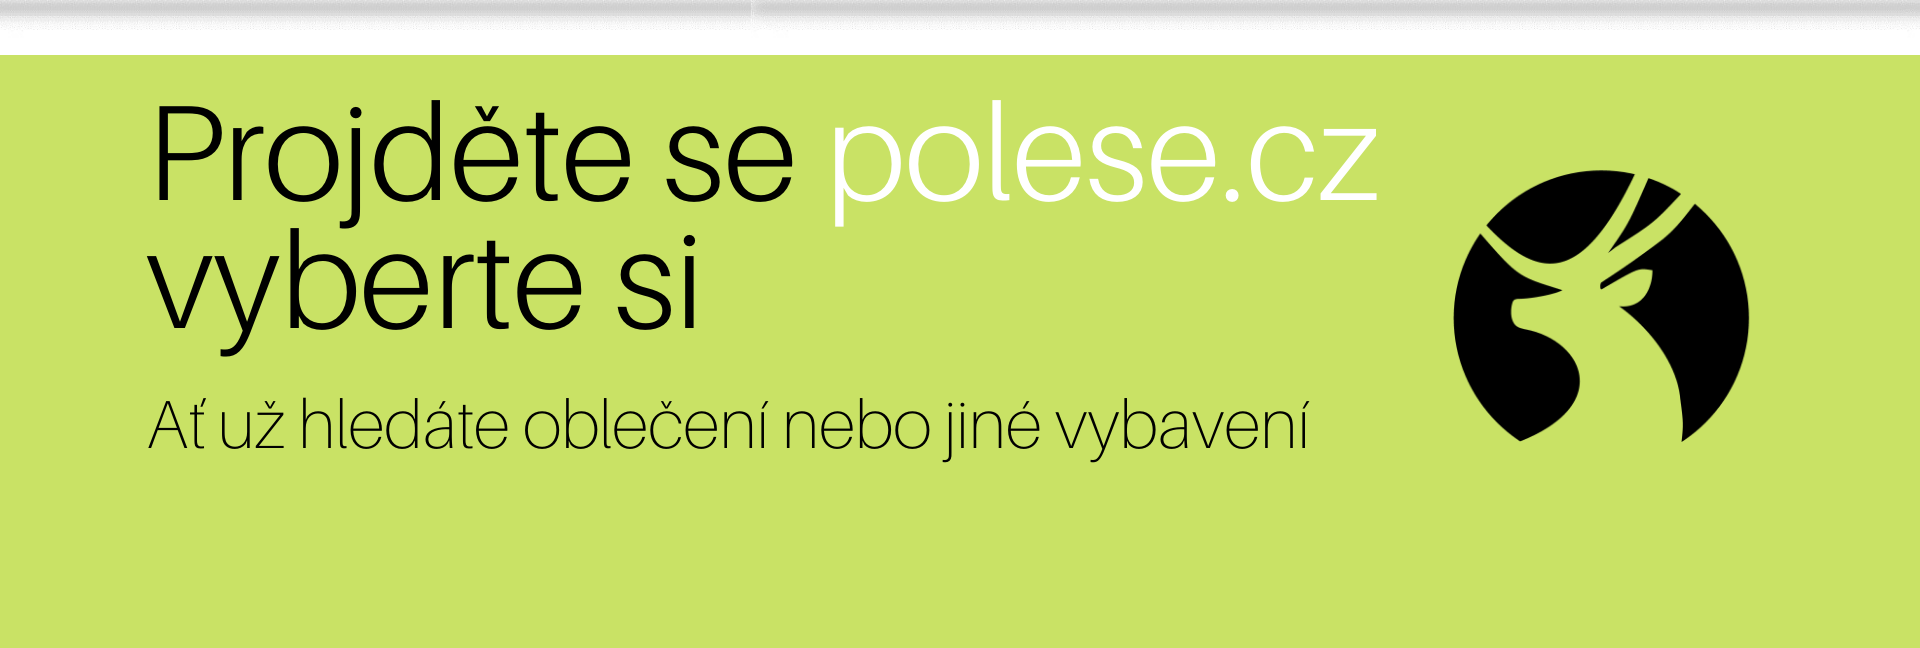 Polese.cz